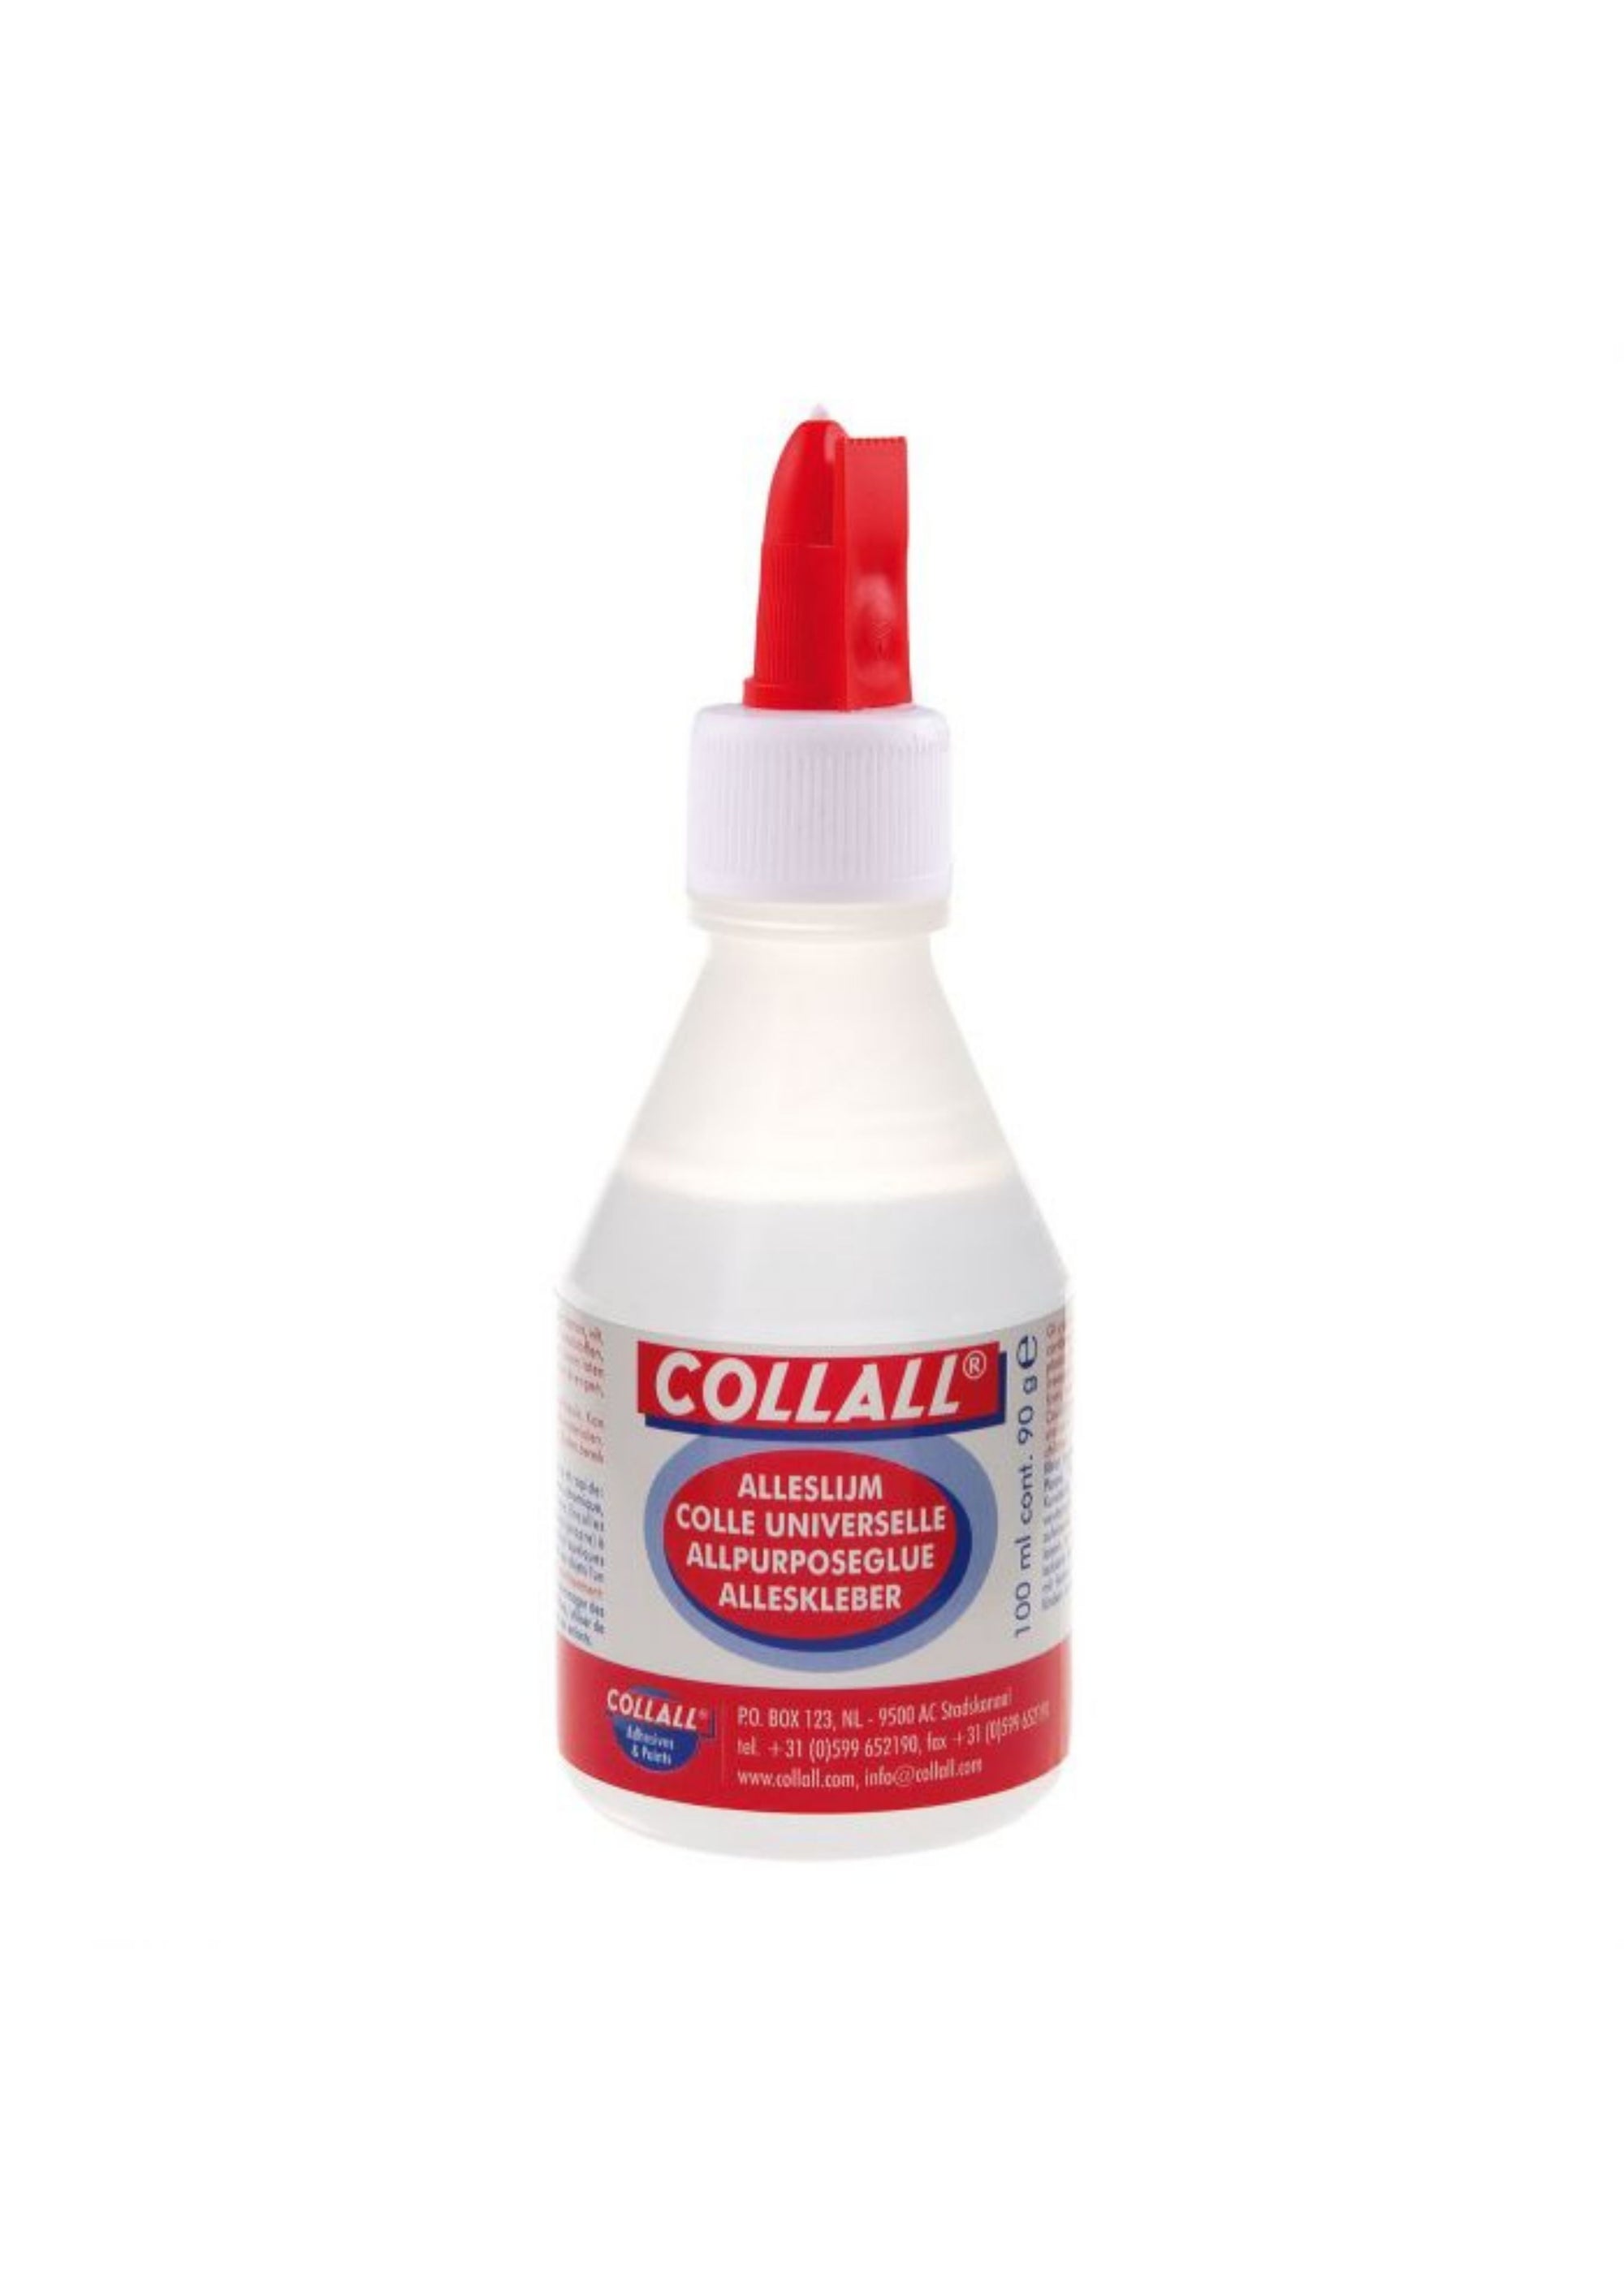 Collall All purpose Glue 50ml